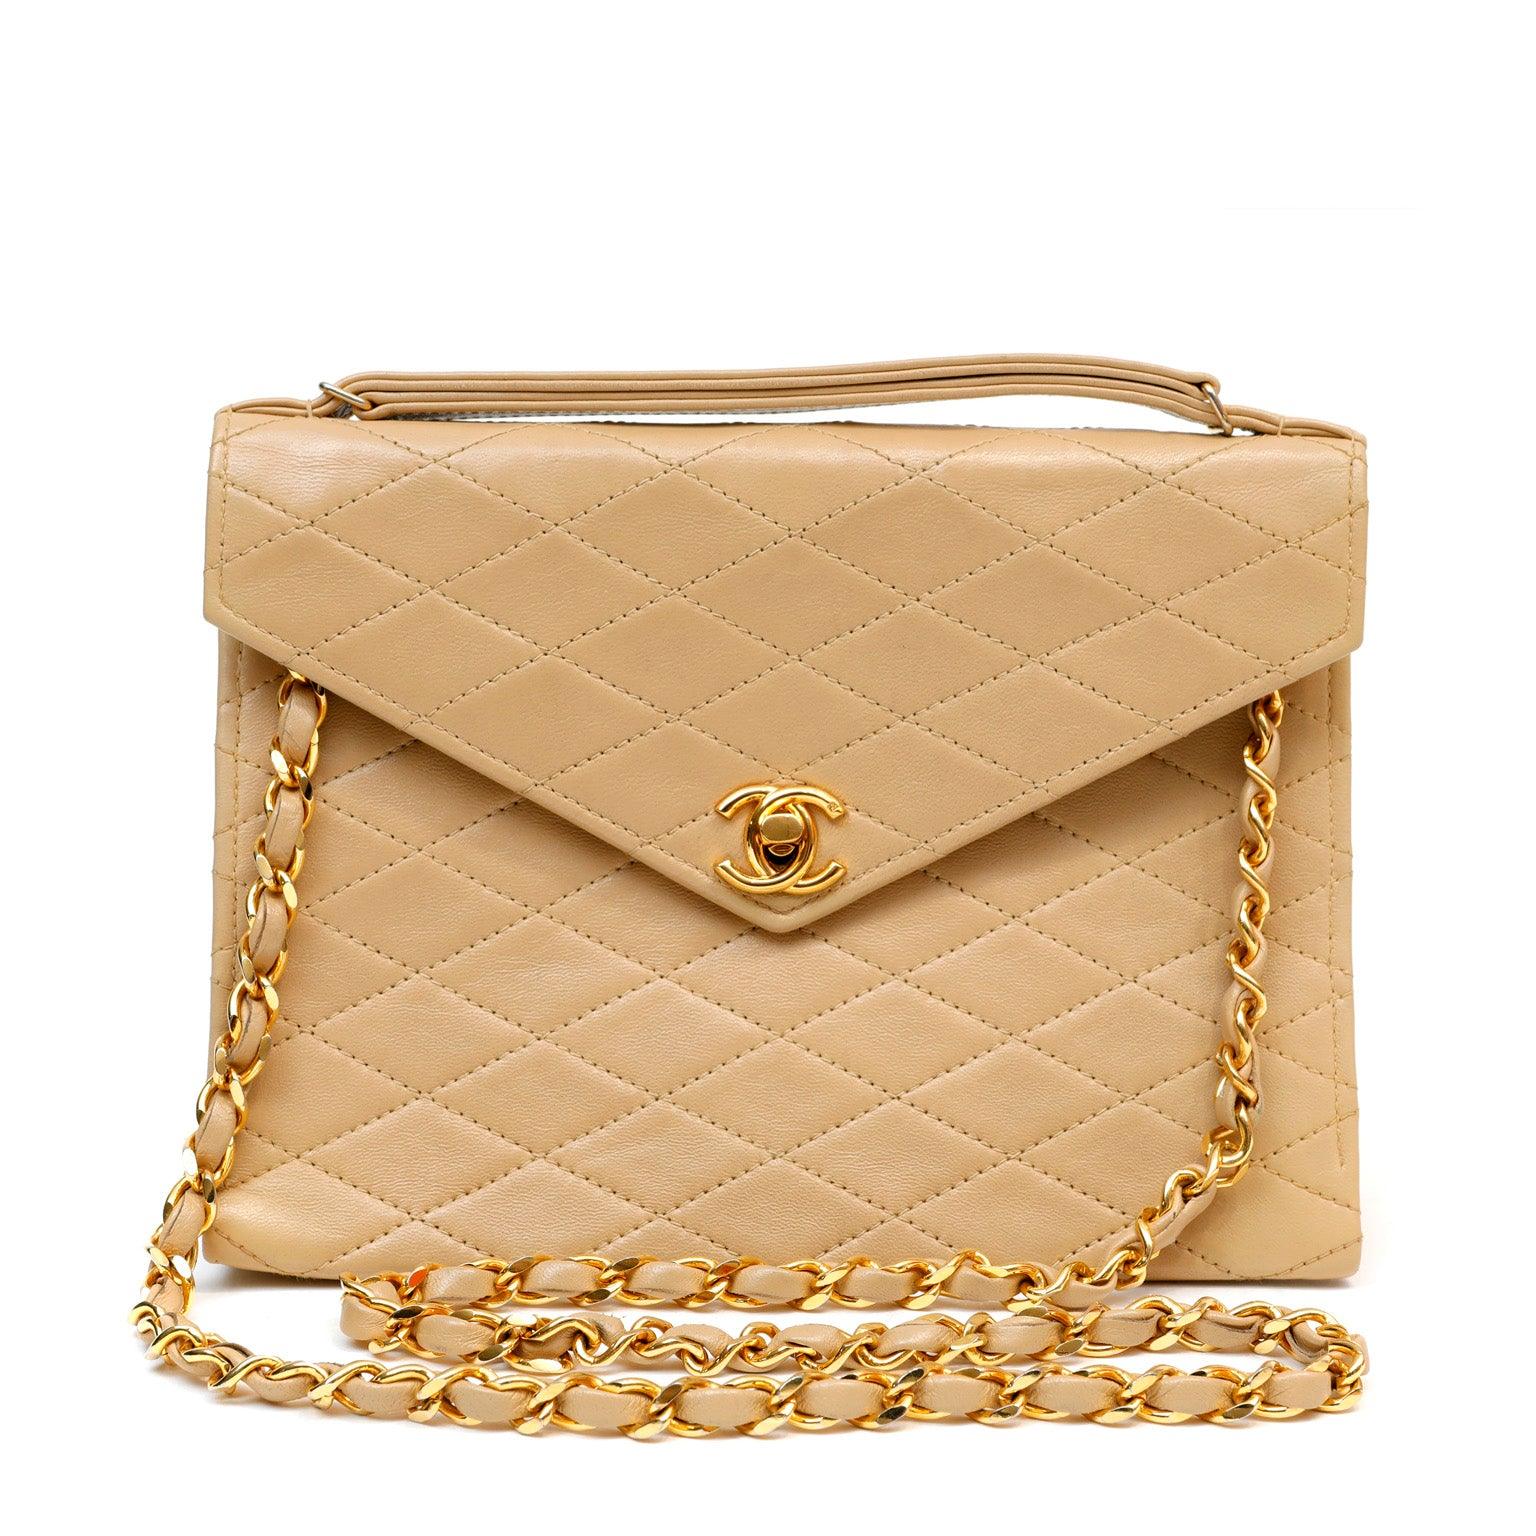 Chanel Vintage Small Single Full Flap Bag Beige Lambskin 24K Gold Hard –  Coco Approved Studio